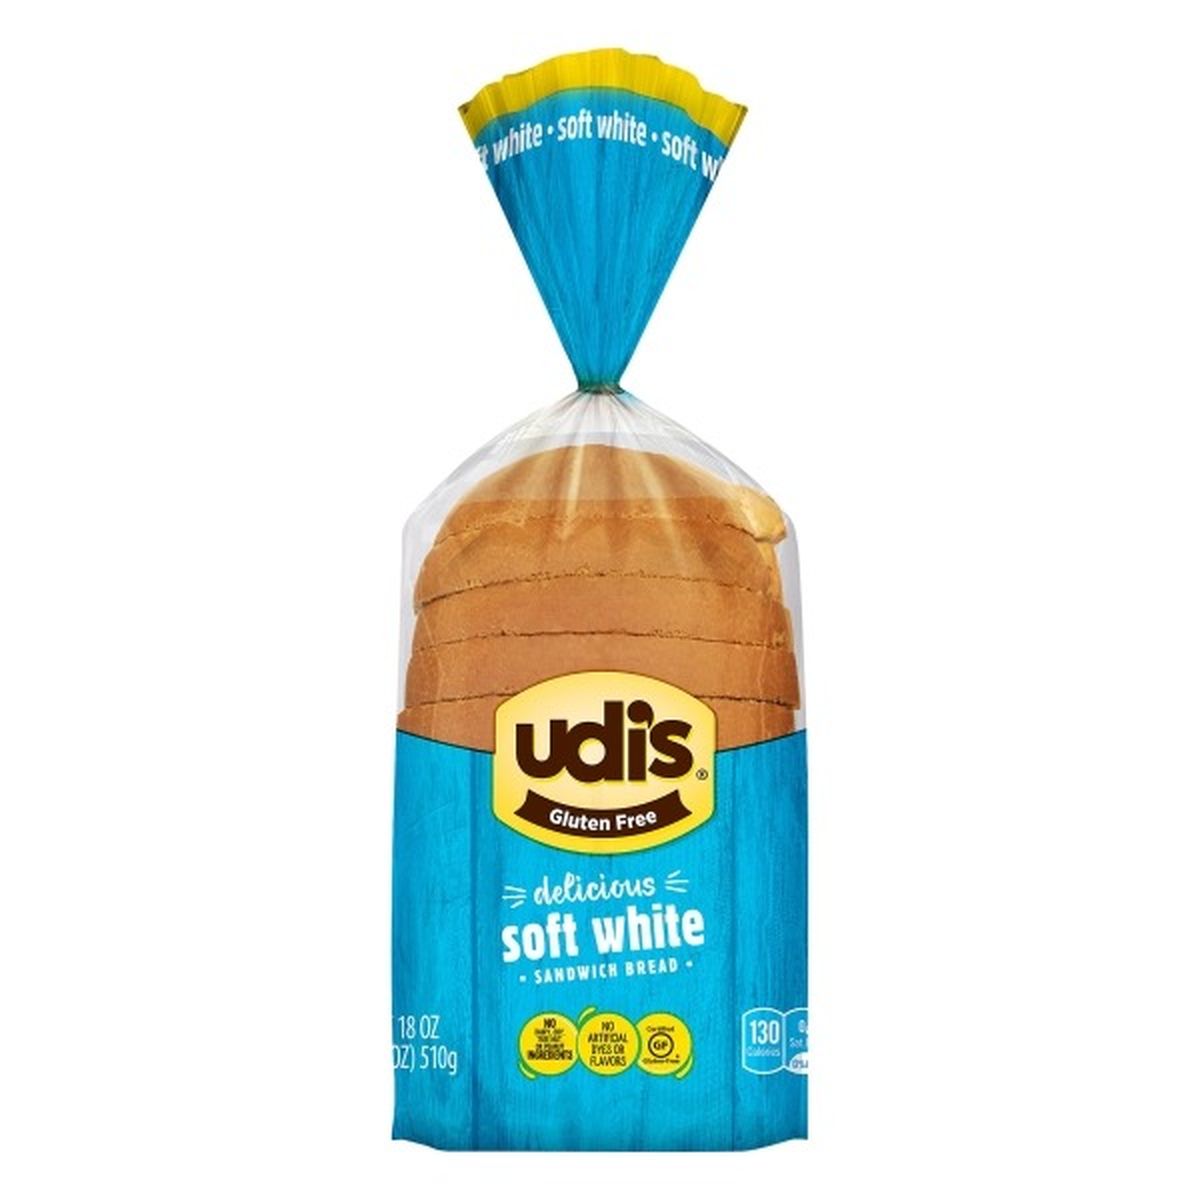 Calories in Udi's Gluten Free Sandwich Bread, Soft White